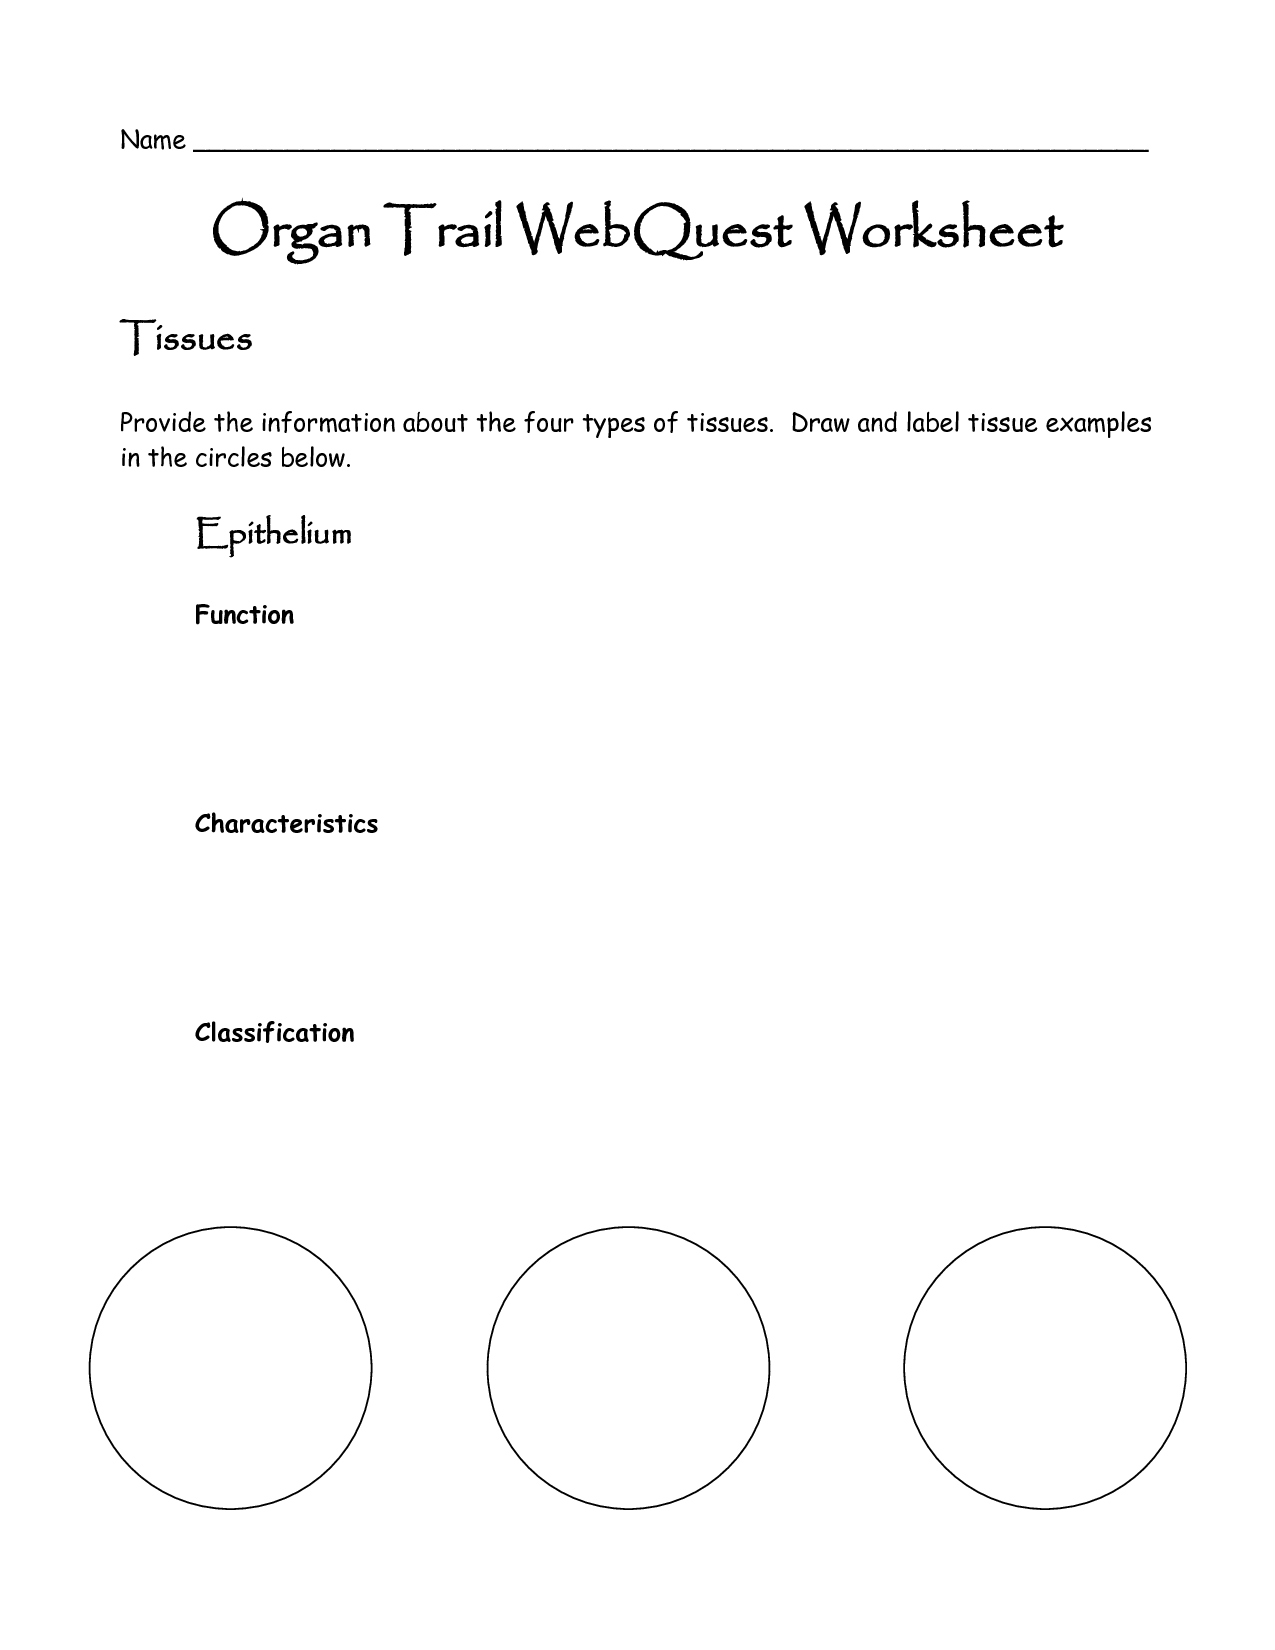 Organ Systems Worksheet Image